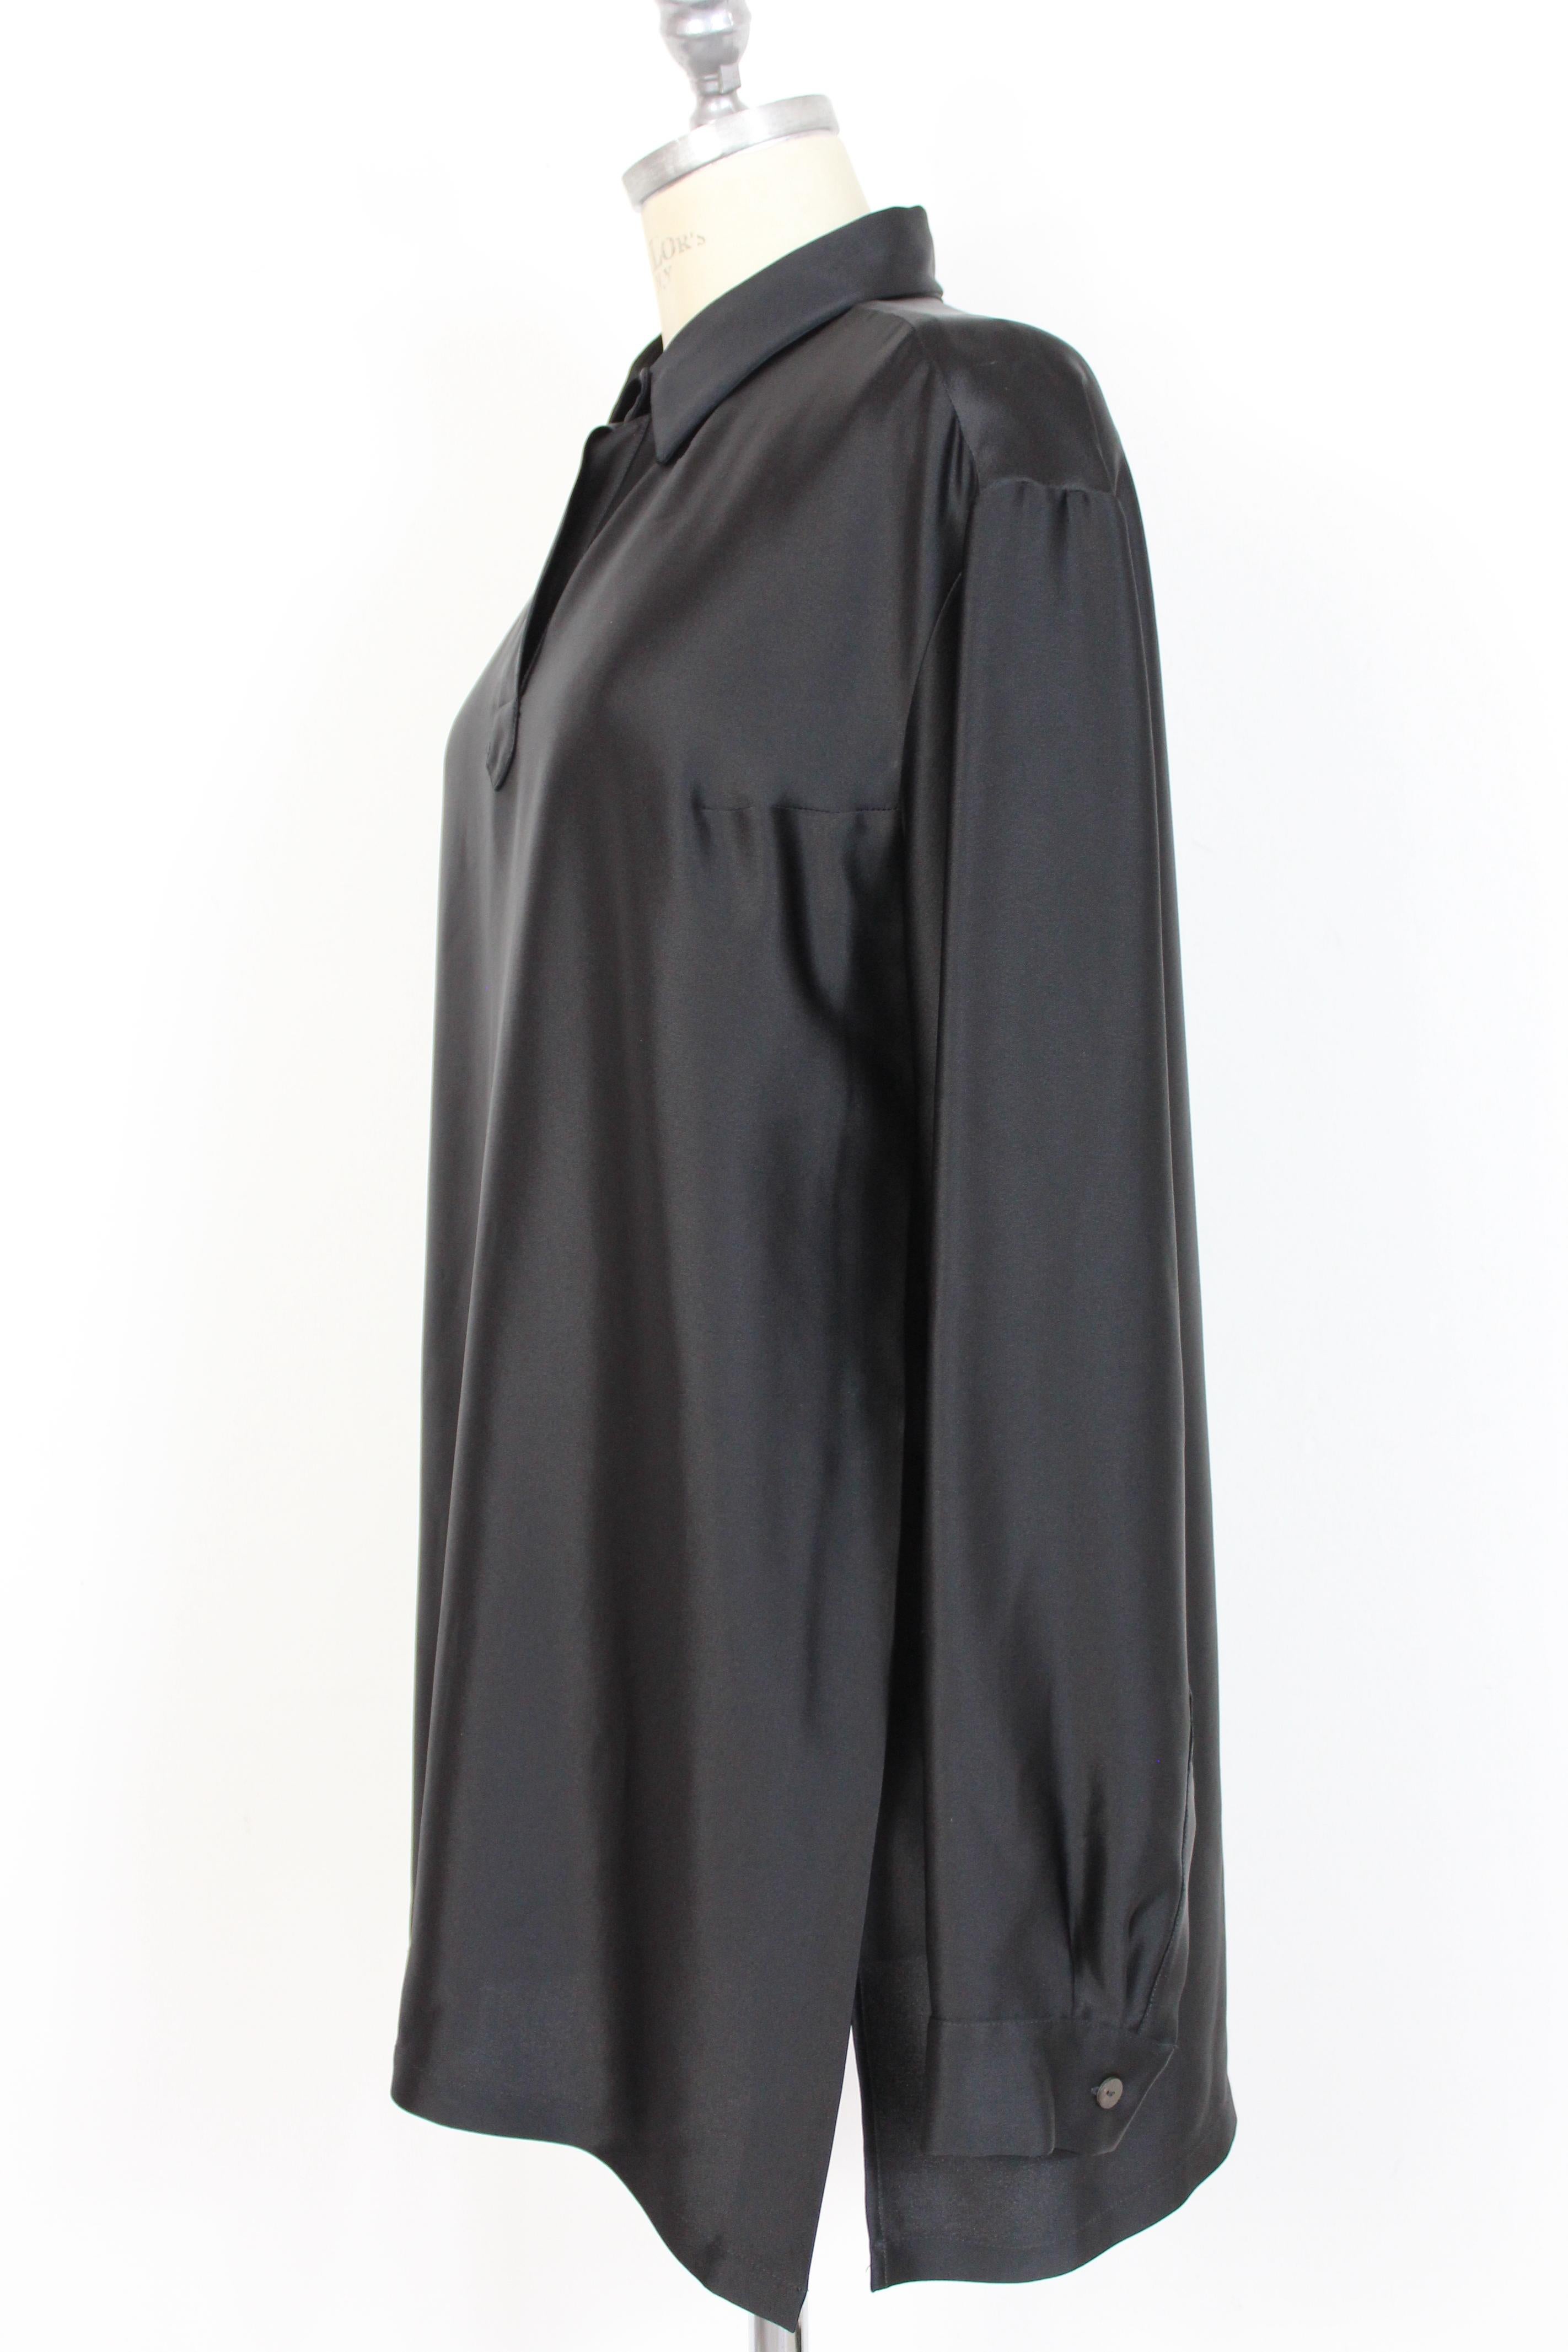 Women's Dries Van Noten Black Shiny Casual Shirt Dress